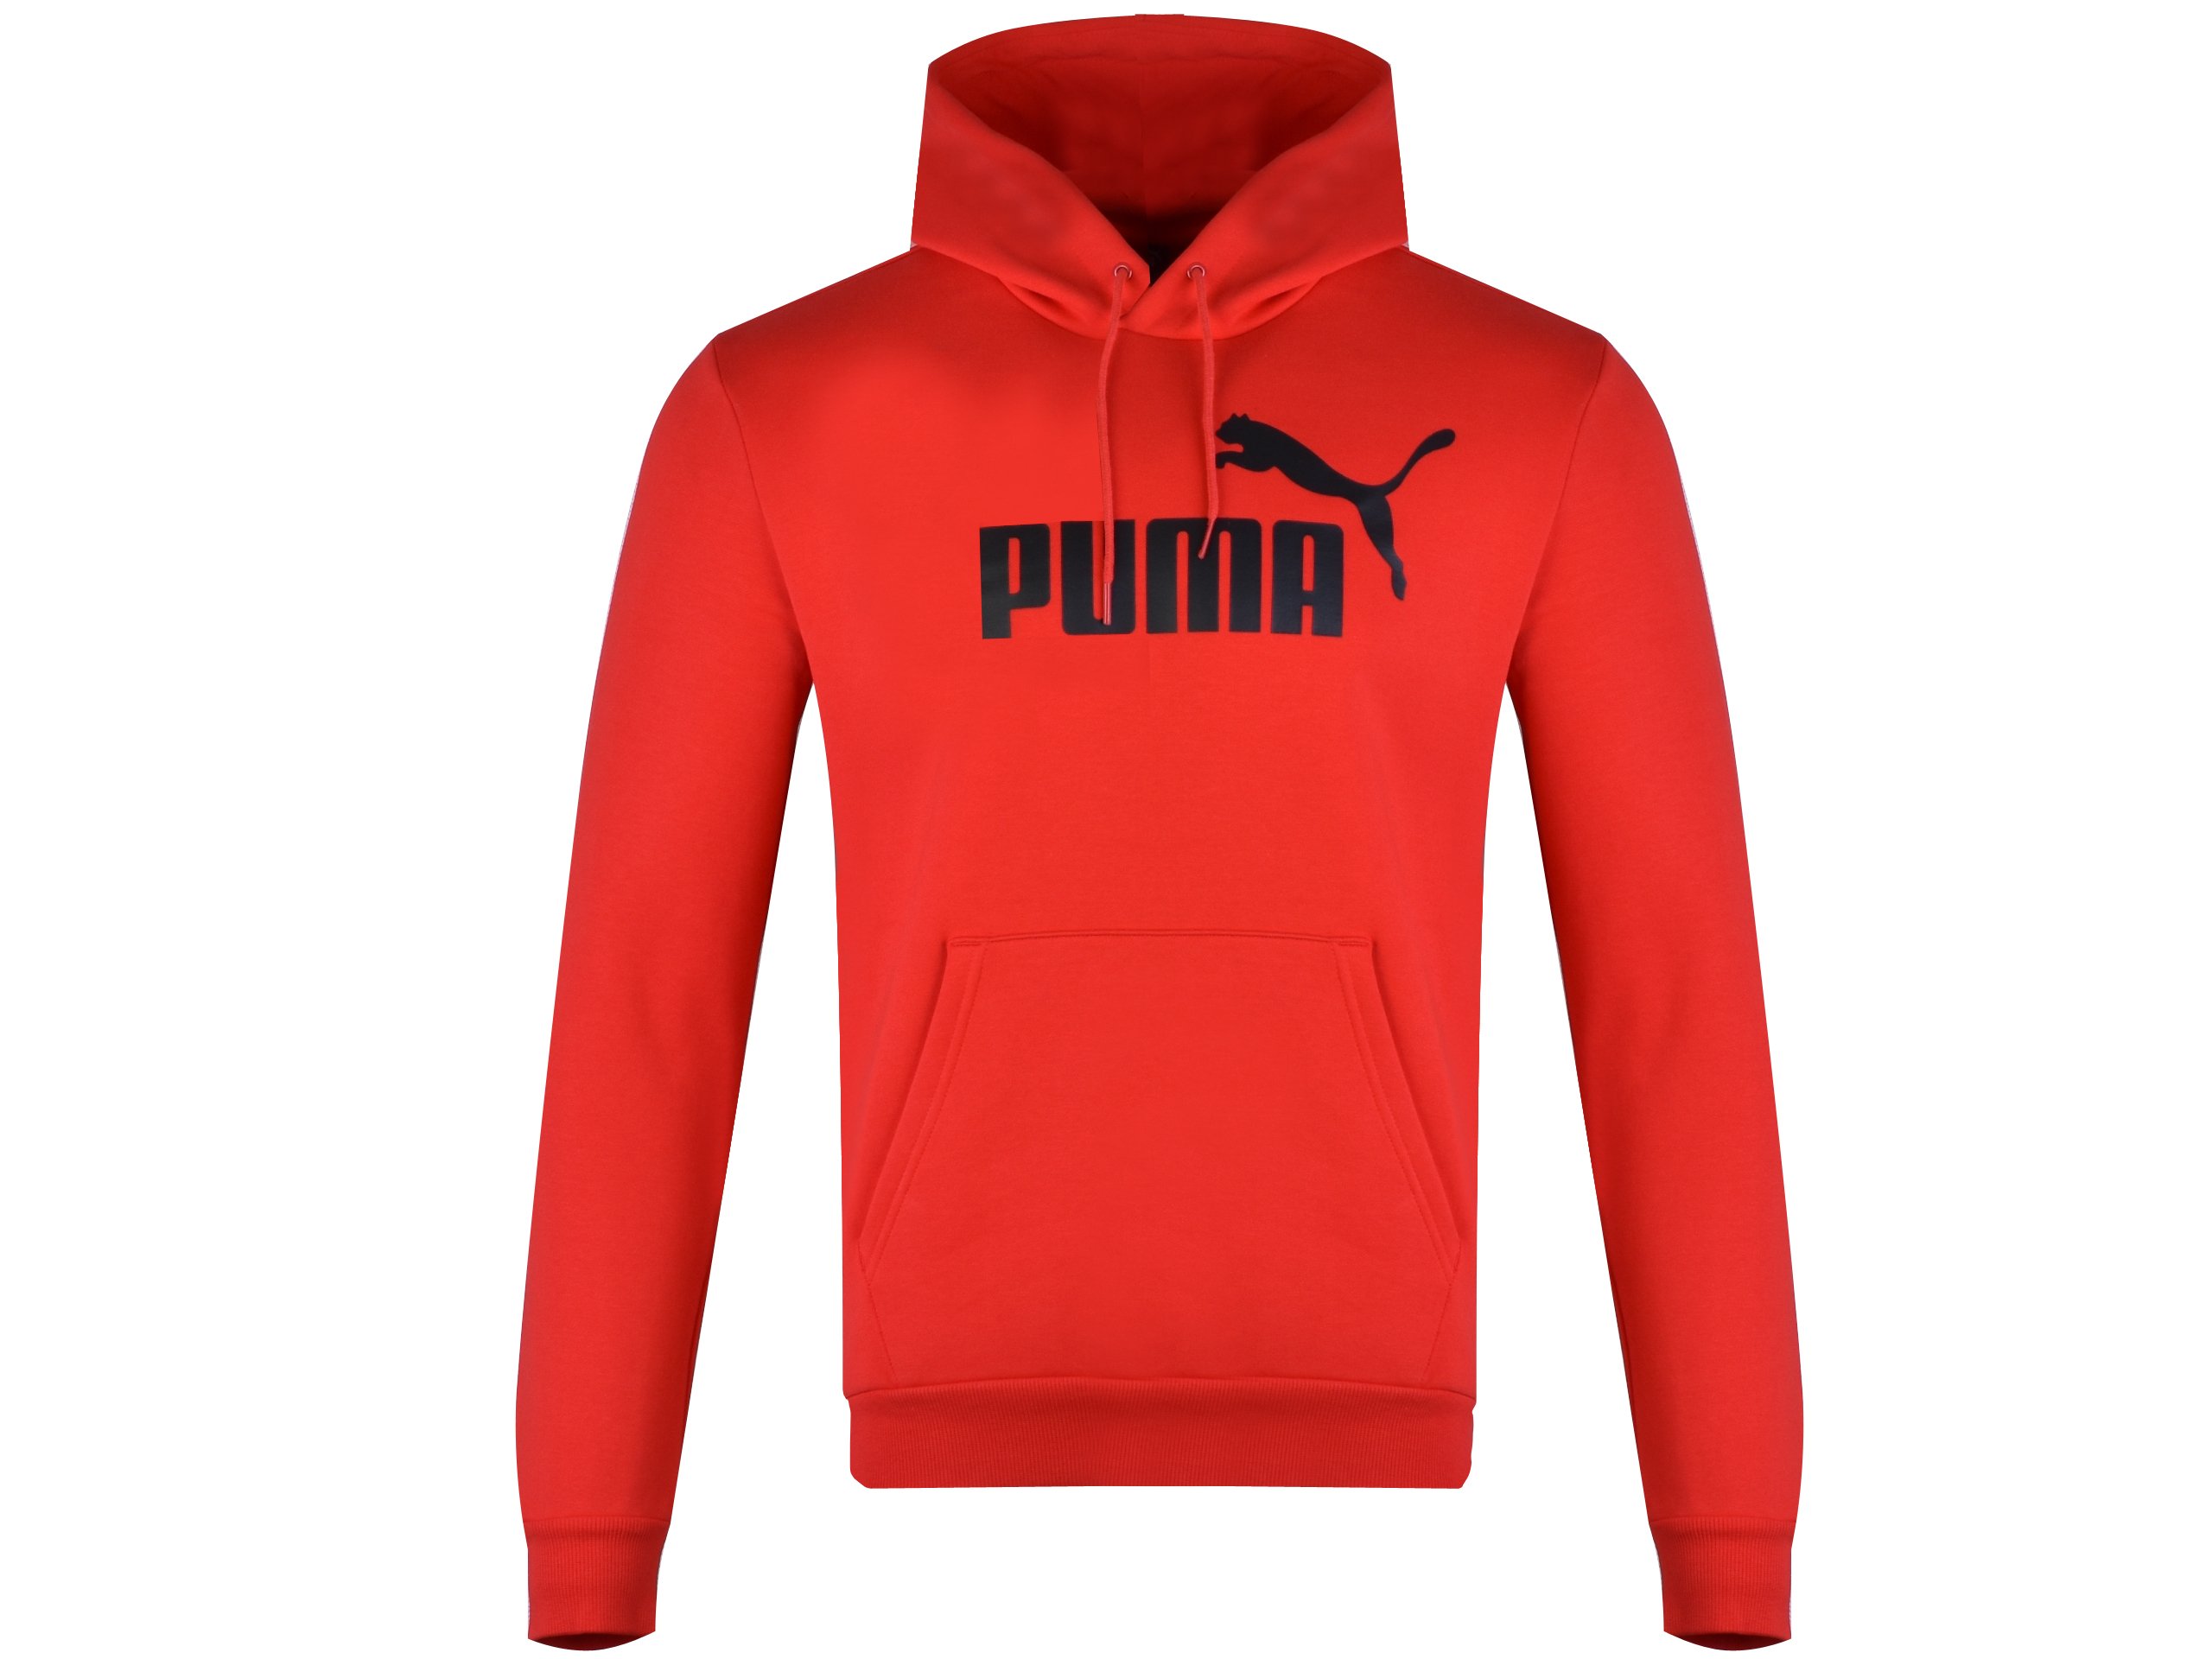 footwear trusted Hoody Logo of FL a ESS Kicks | | Big Hoodie - - Puma branded Czerwony Red 851743-05 Sport - - supplier sports